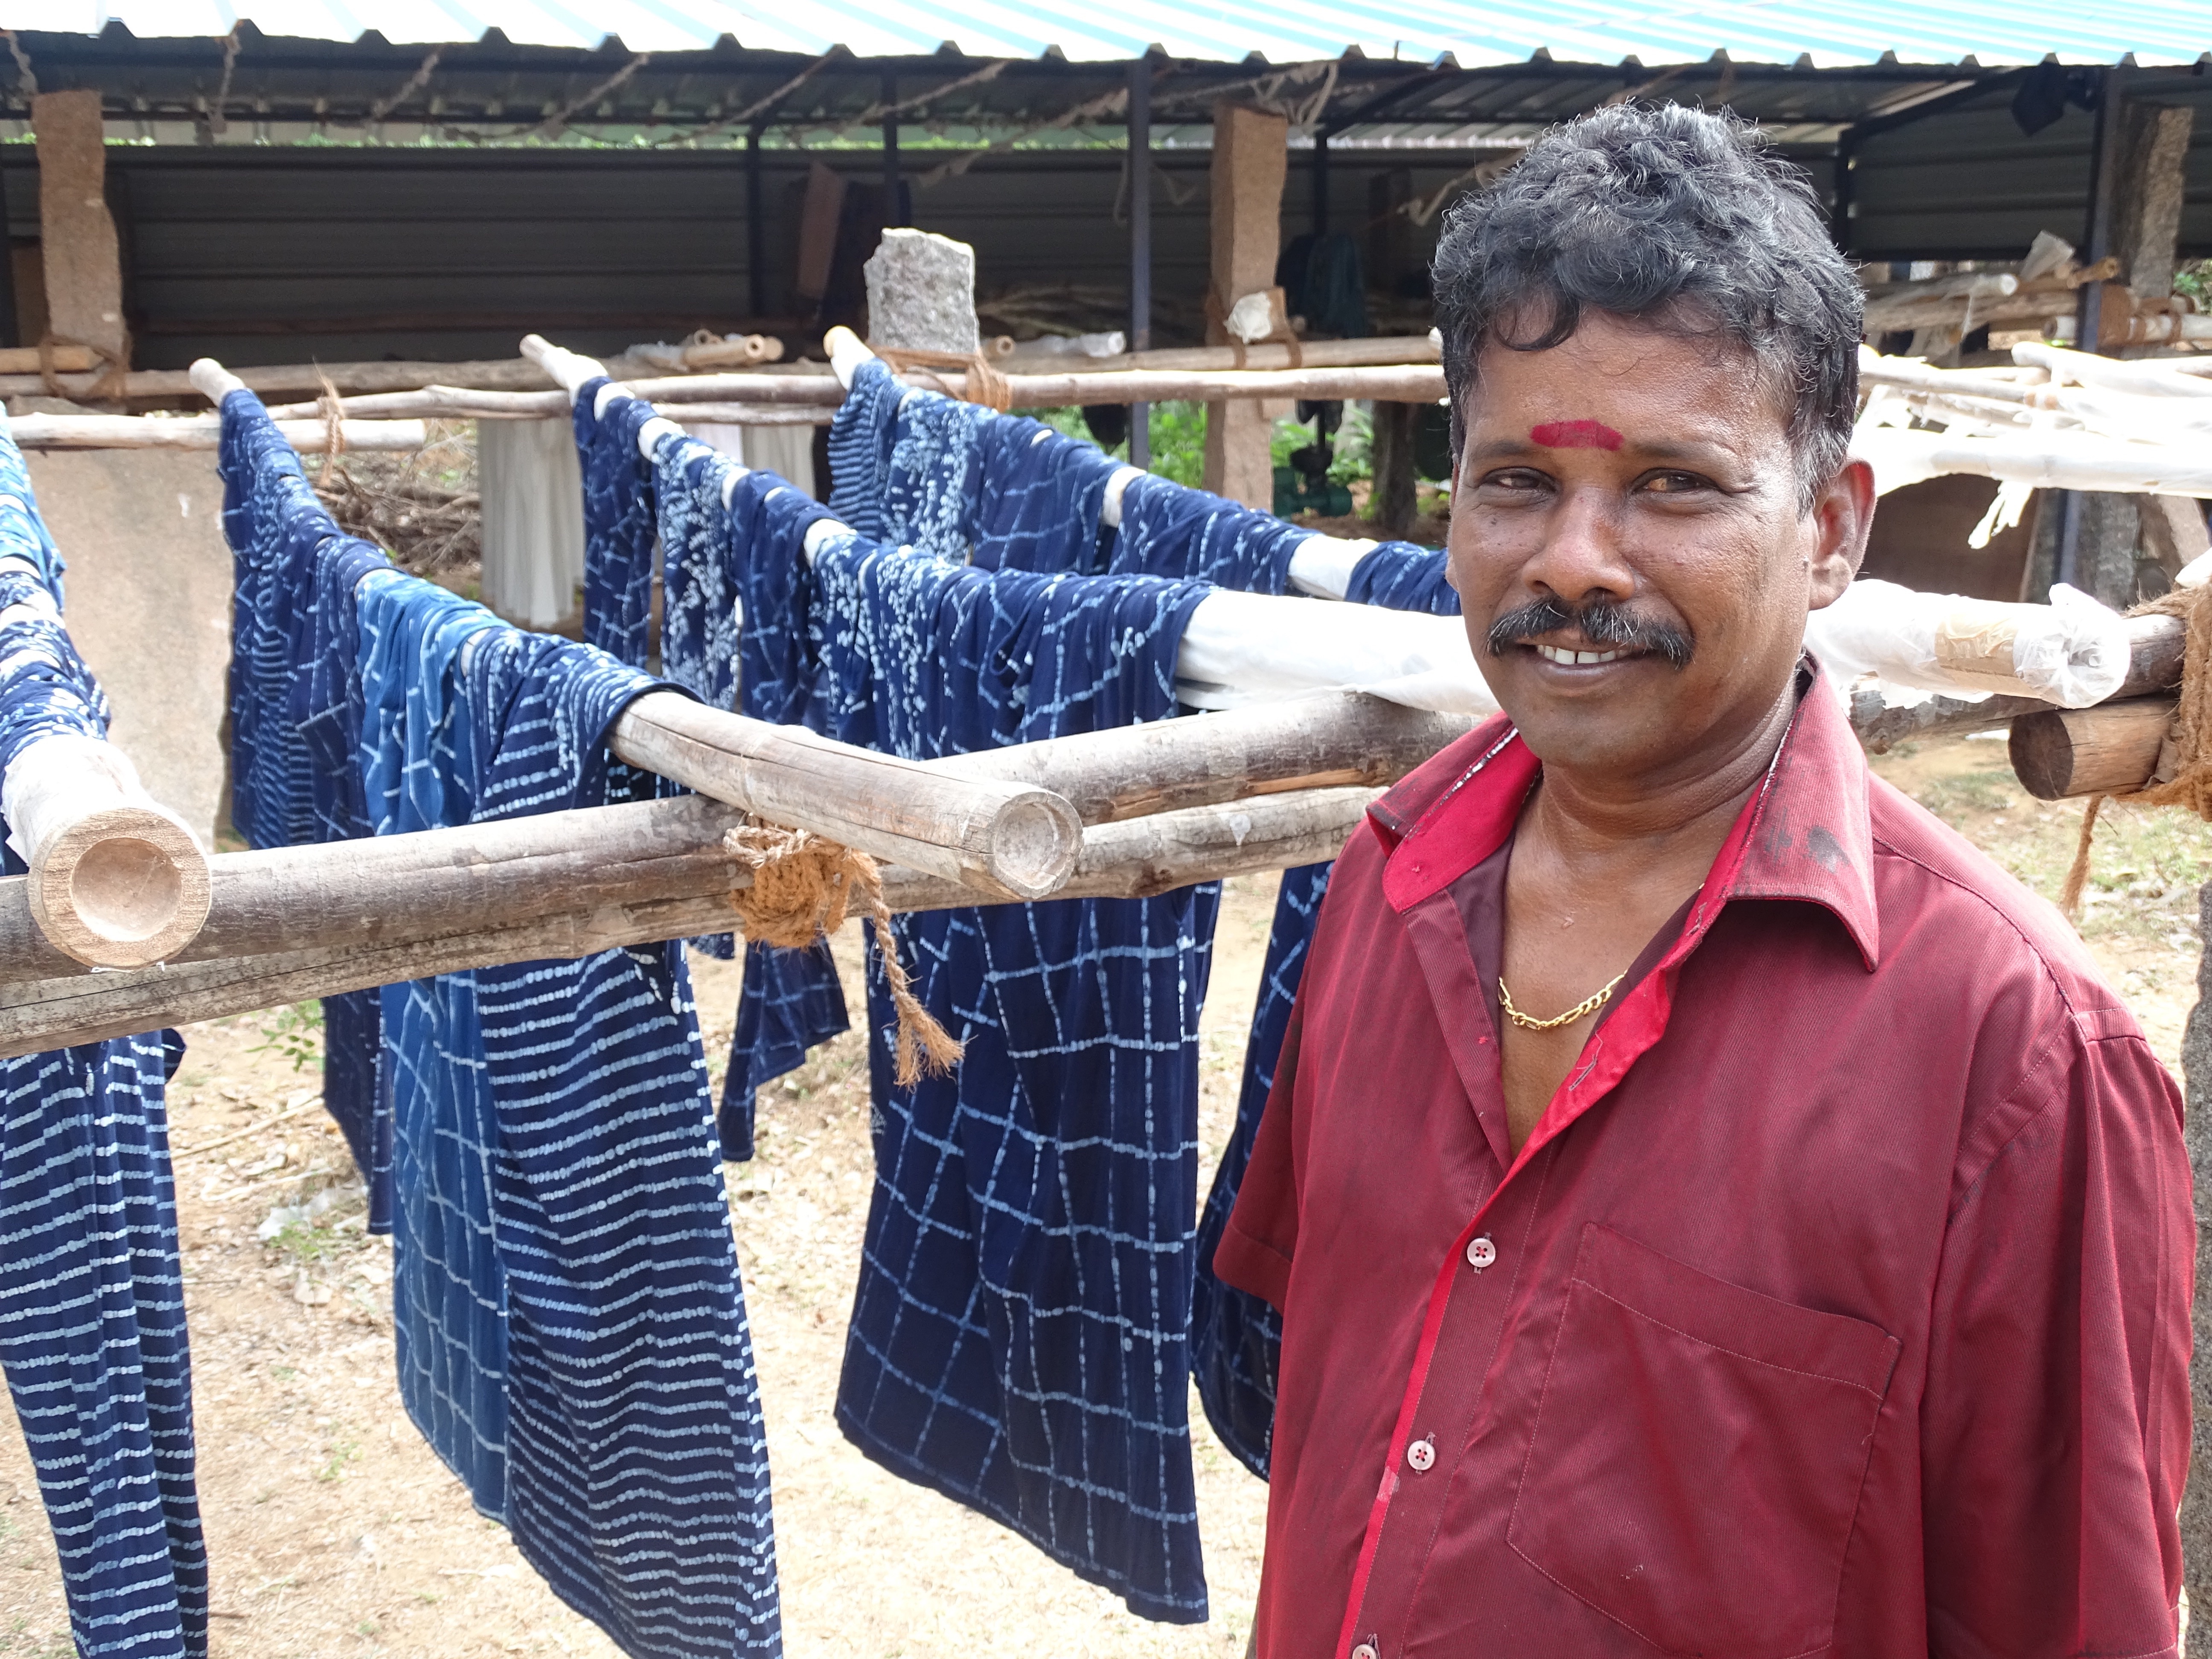 organic cotton shirts india